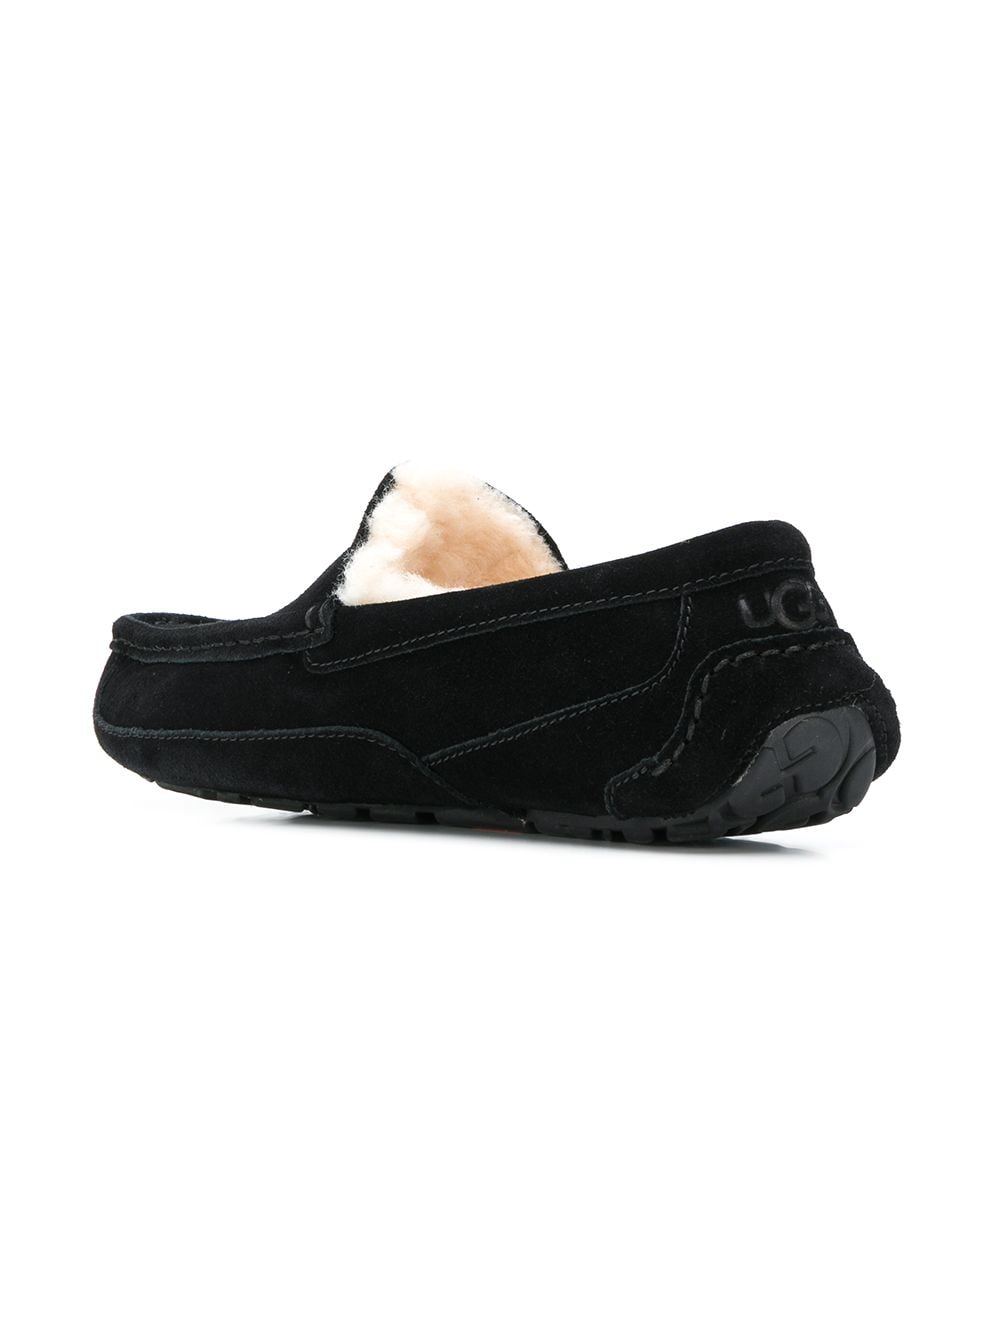 UGG Australia Flat shoes Black